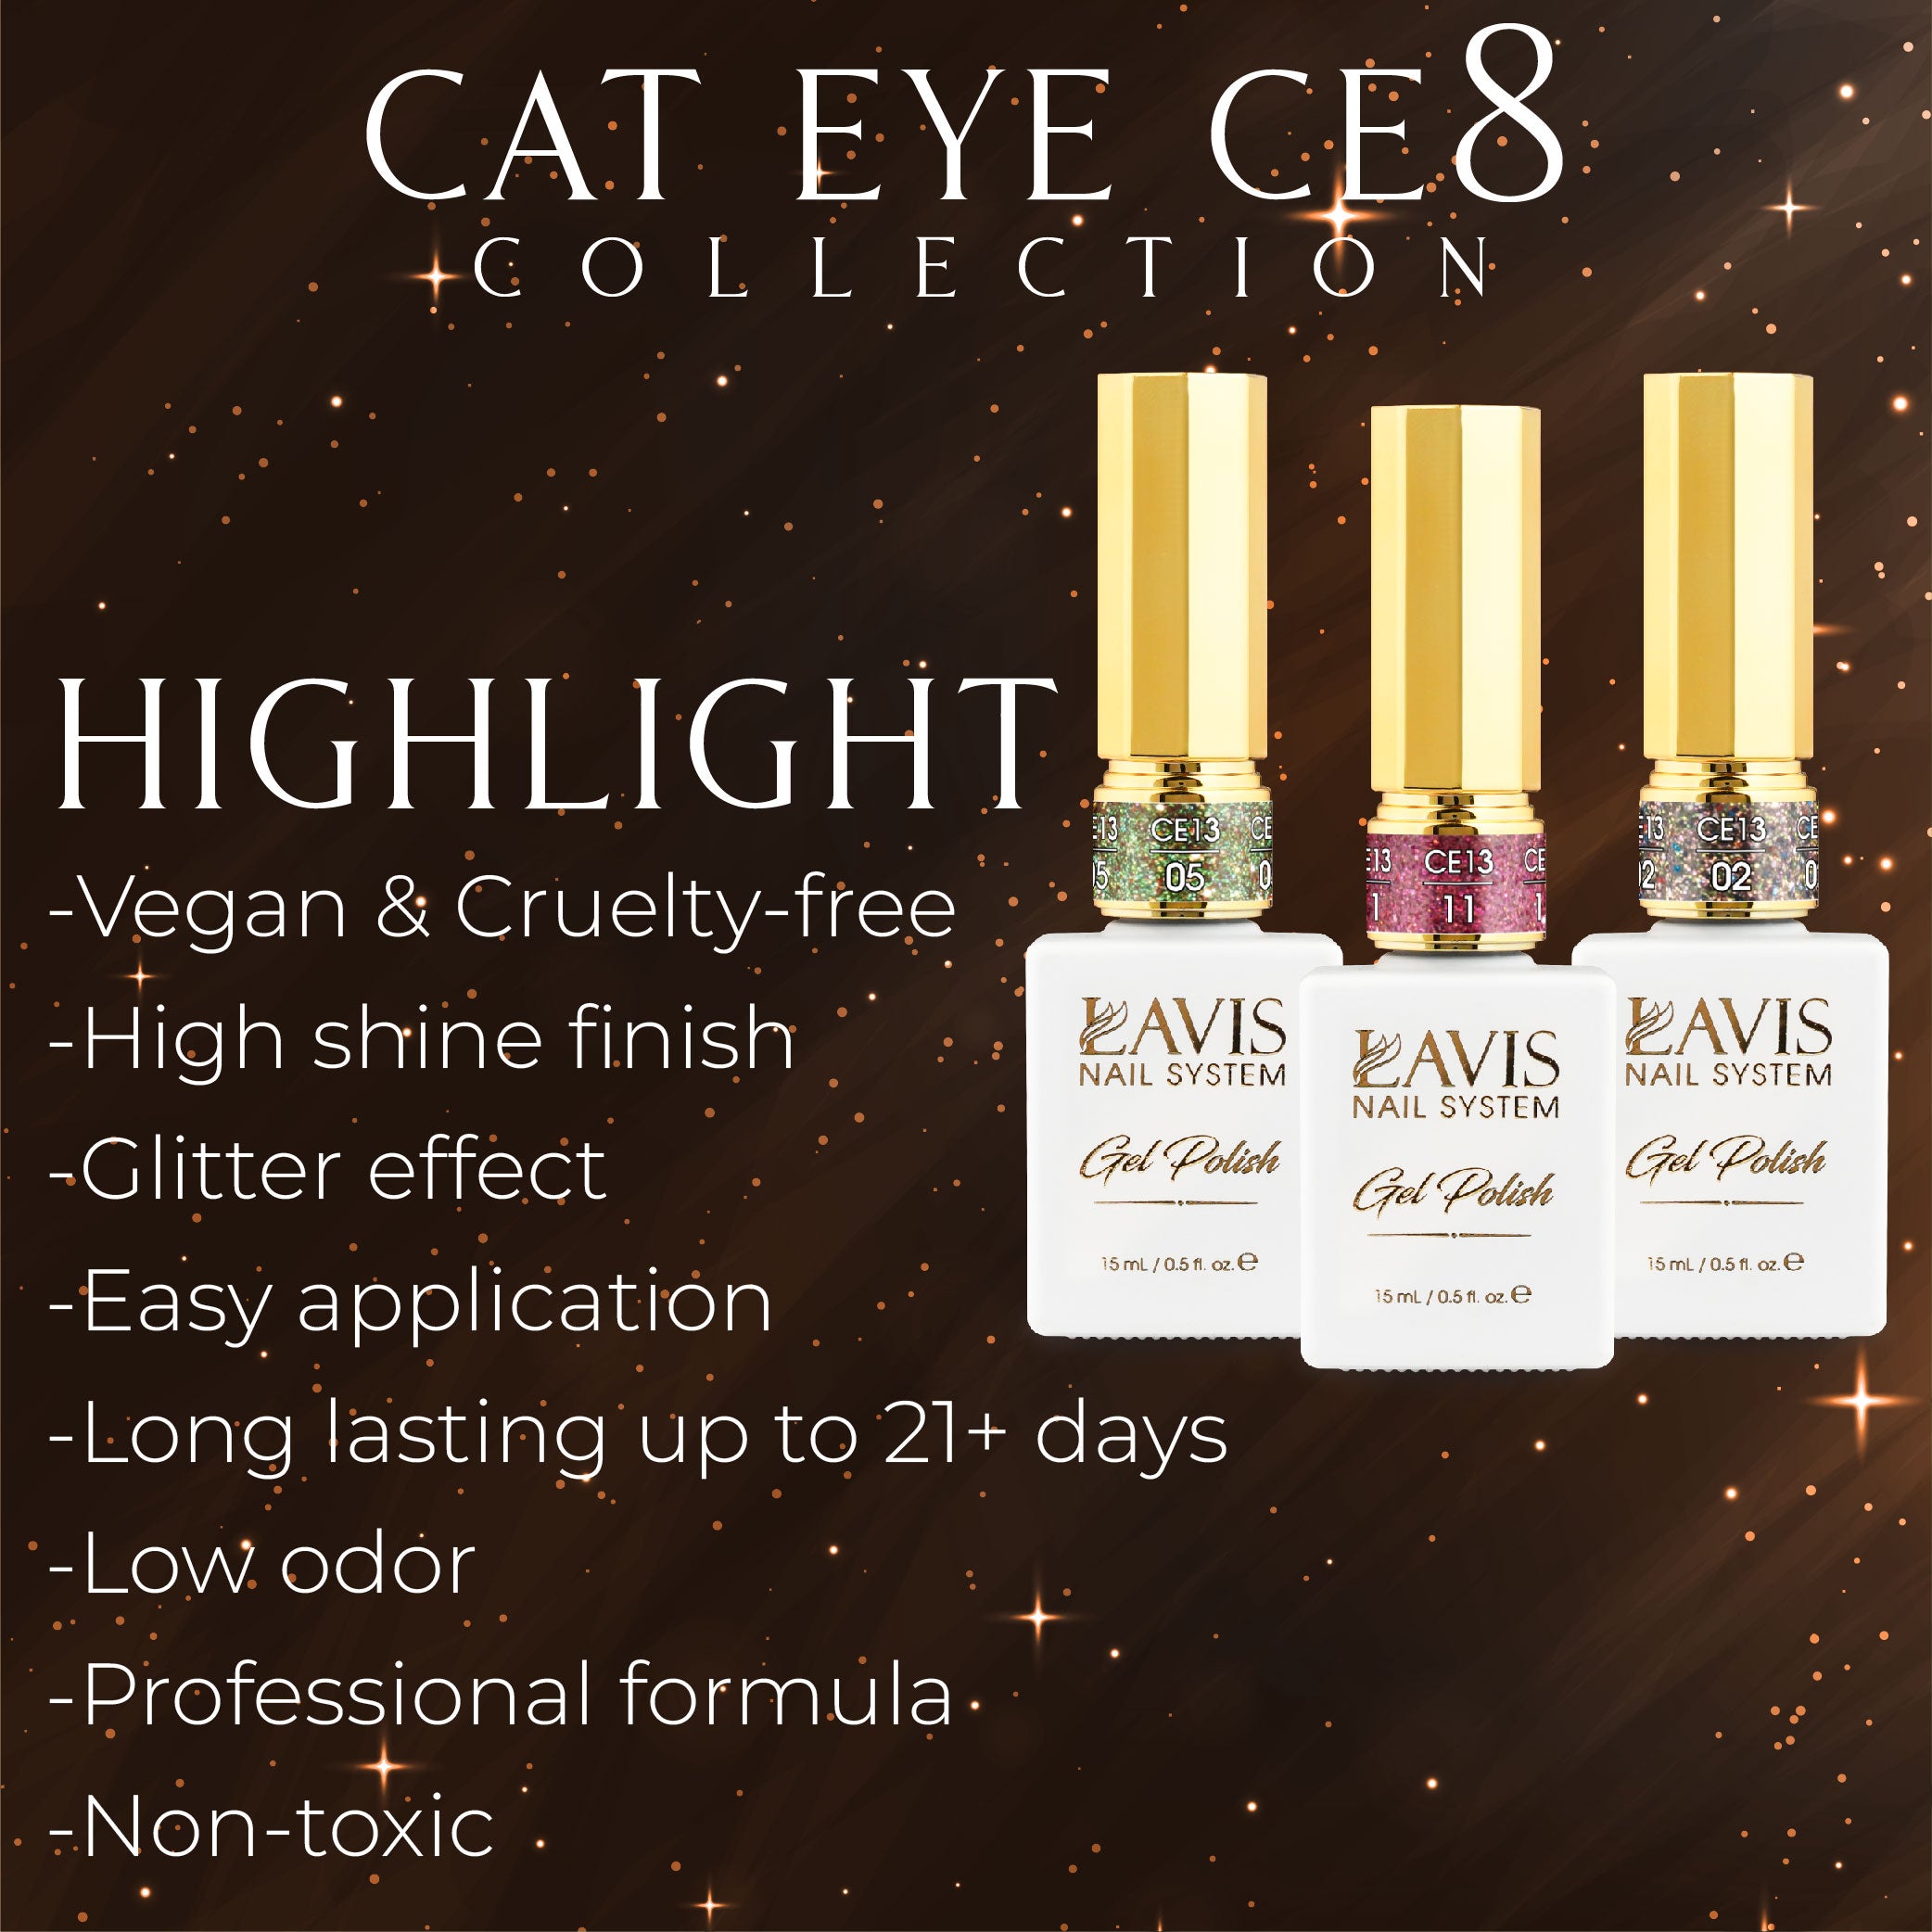 LAVIS Cat Eyes CE8 - 07 - Gel Polish 0.5 oz - Lavis Hidden Treasures Collection